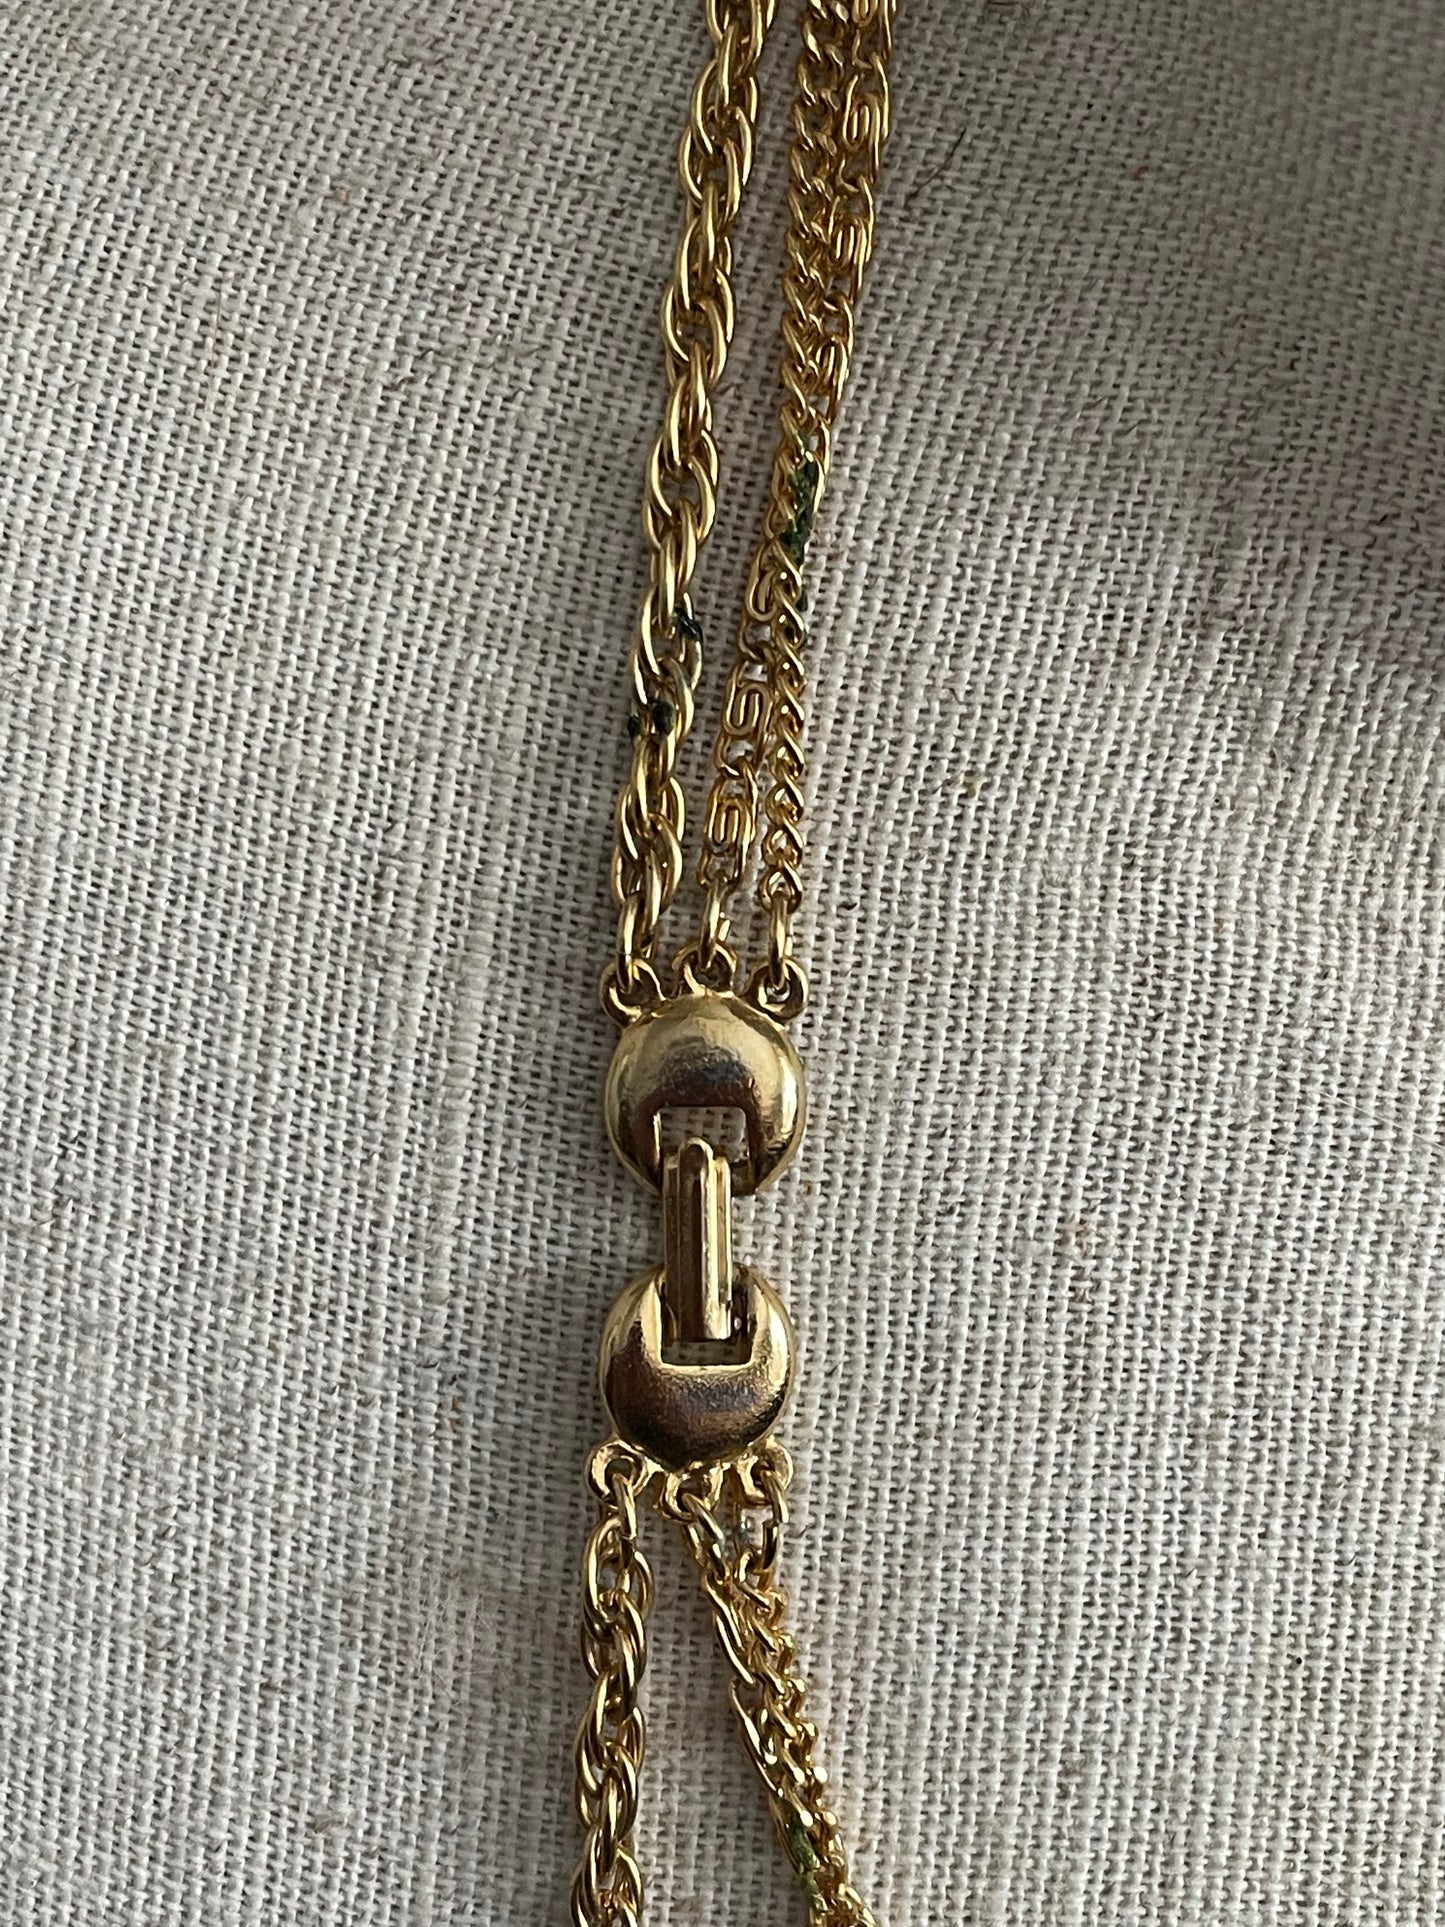 Vintage Multi Strand Goldtone Chain Necklace Floral Pendant